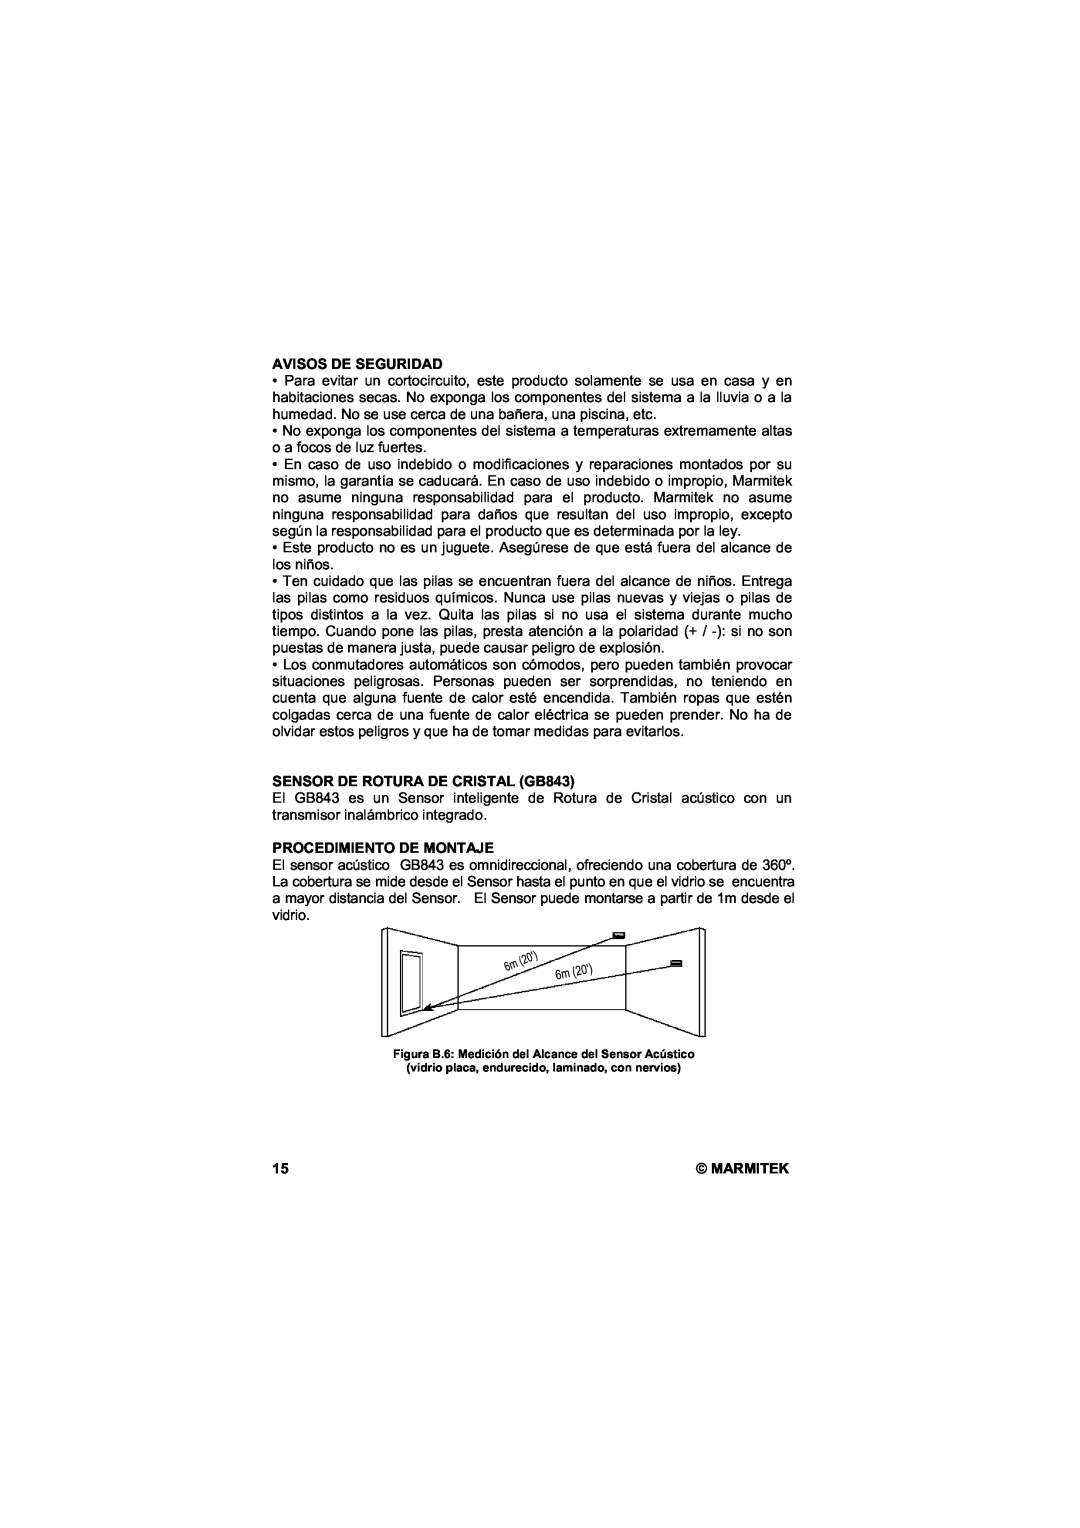 Marmitek user manual Avisos De Seguridad, SENSOR DE ROTURA DE CRISTAL GB843, Procedimiento De Montaje 